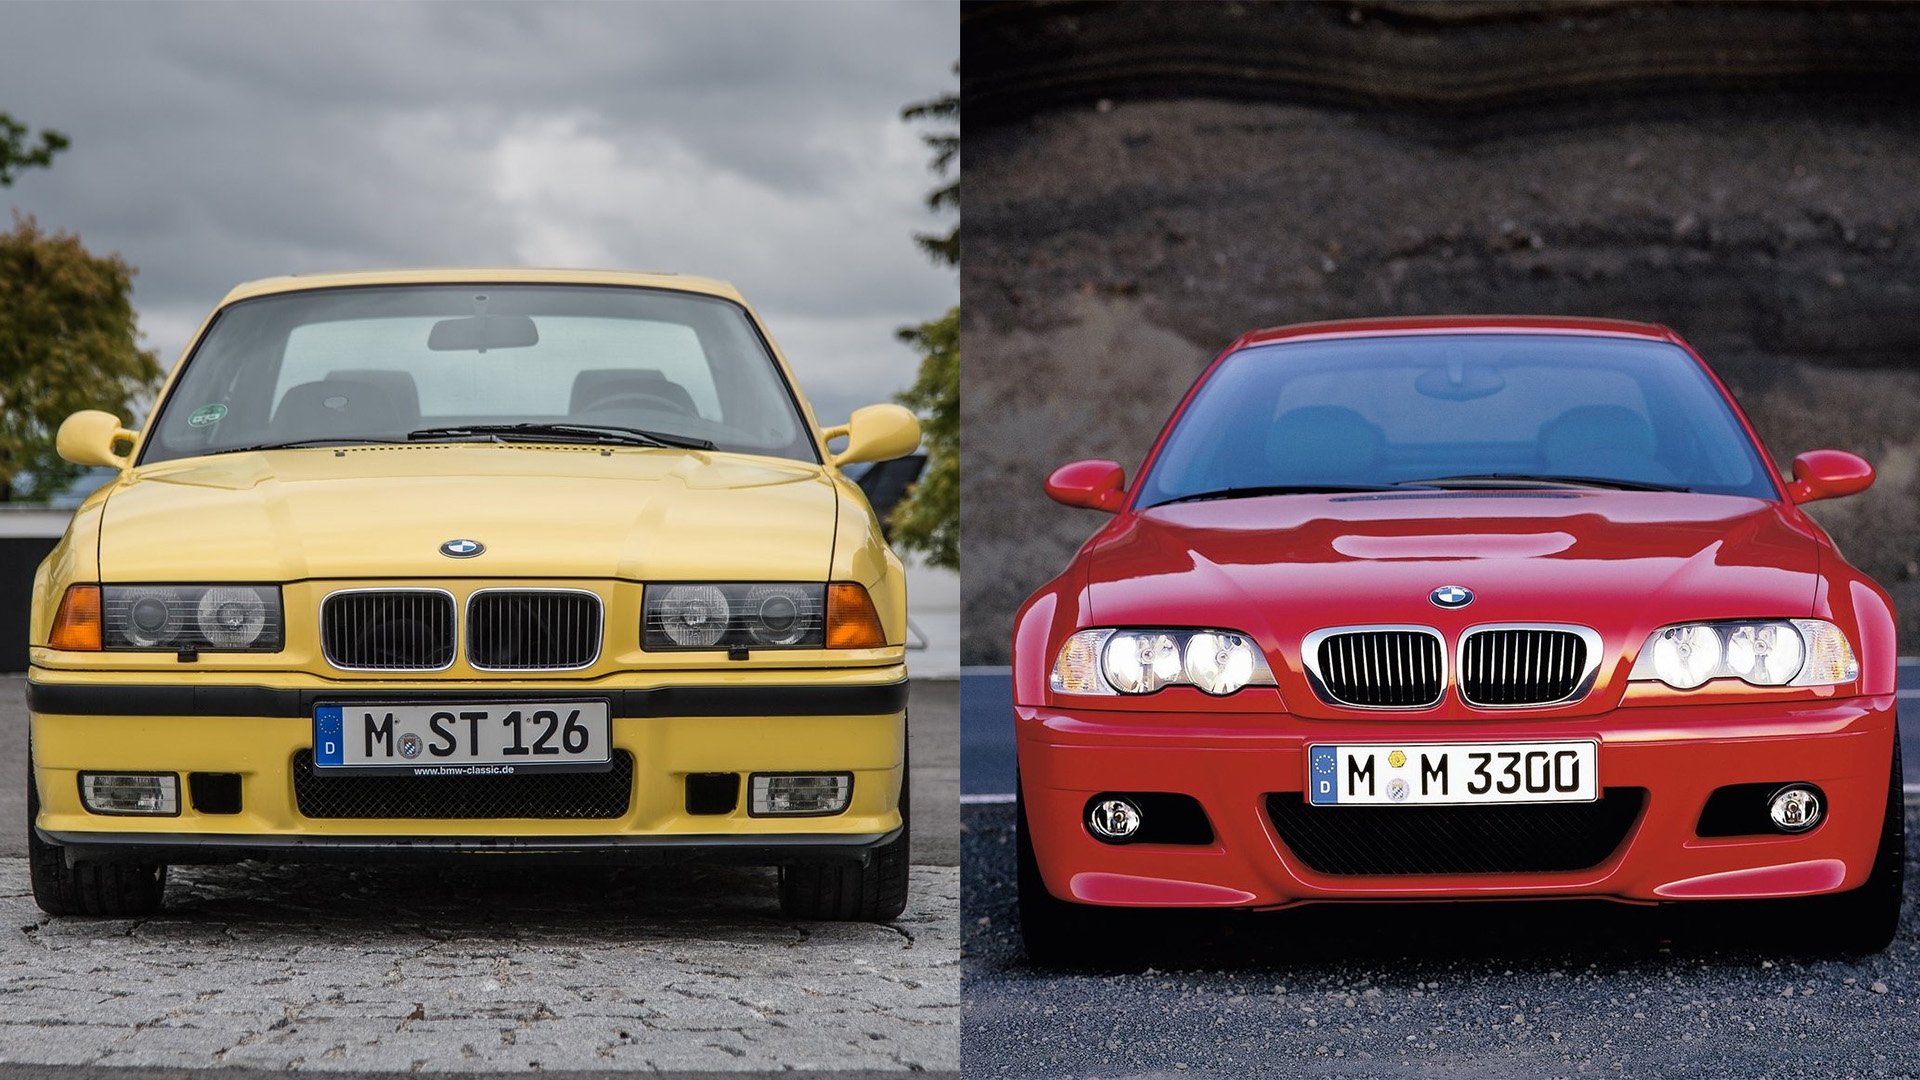 BMW E36 vs. E46 - Battle of the Bavarians